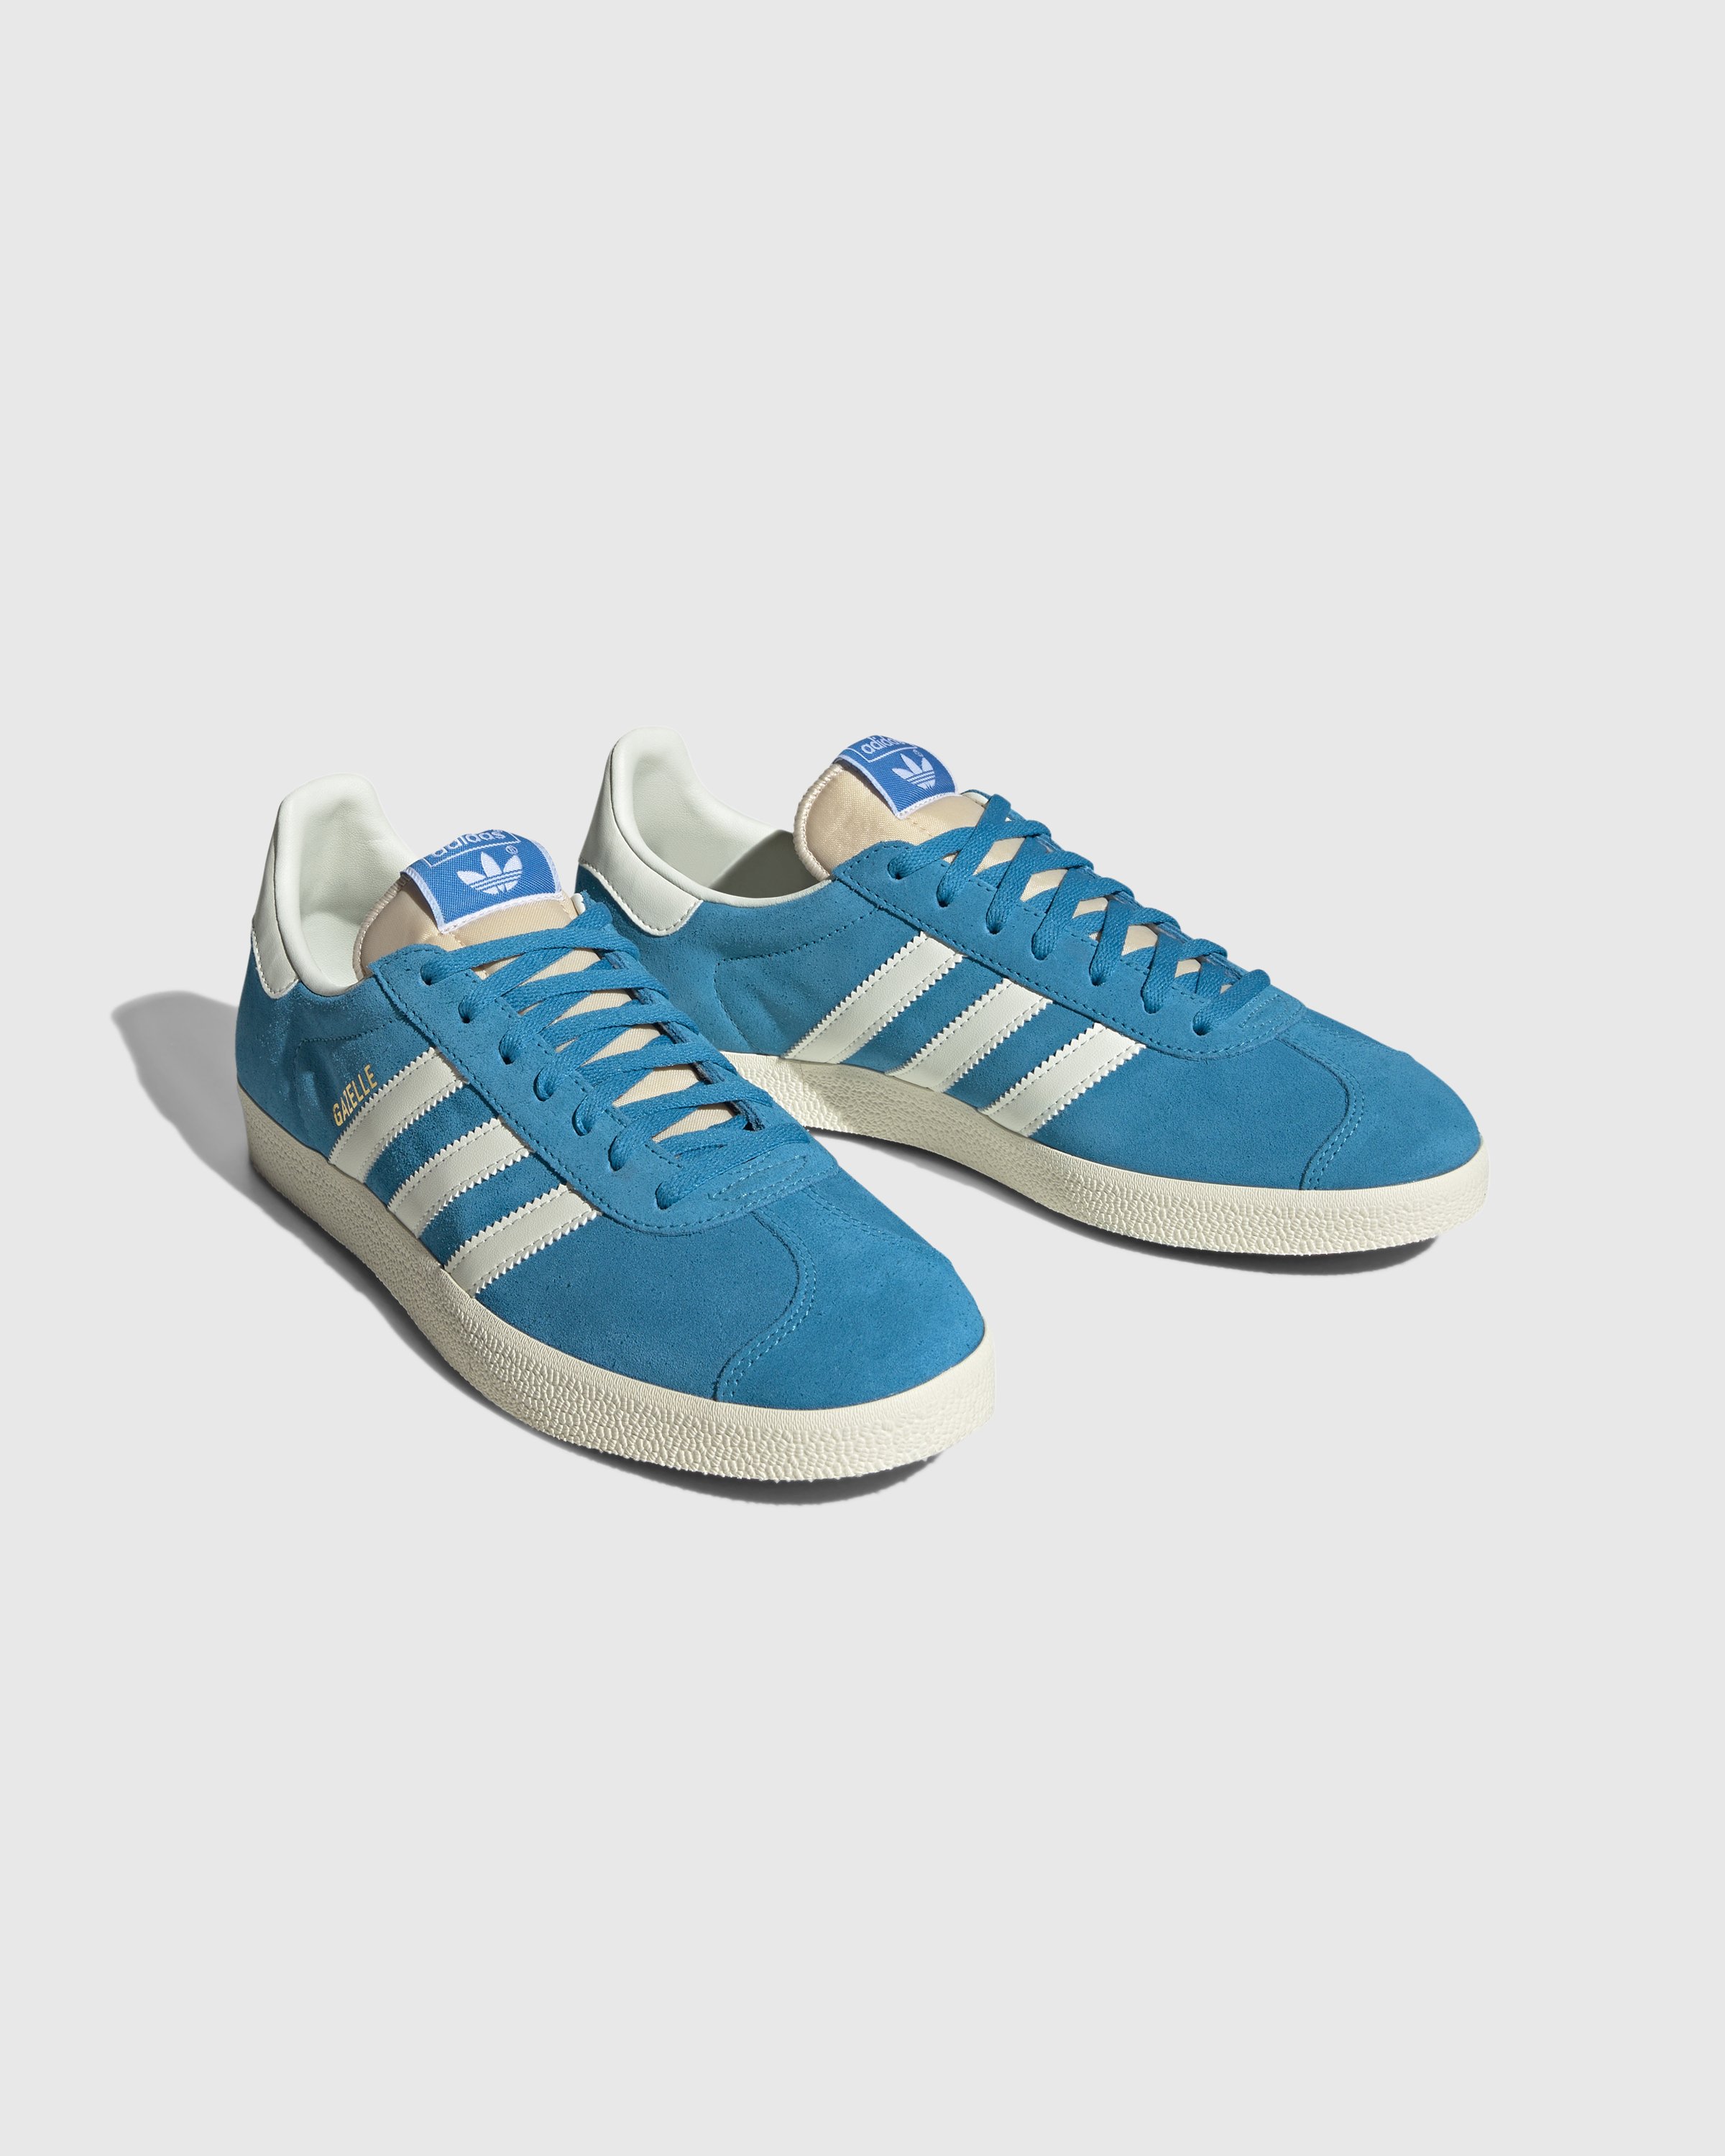 Adidas - Gazelle Aqua/White - Footwear - Blue - Image 3